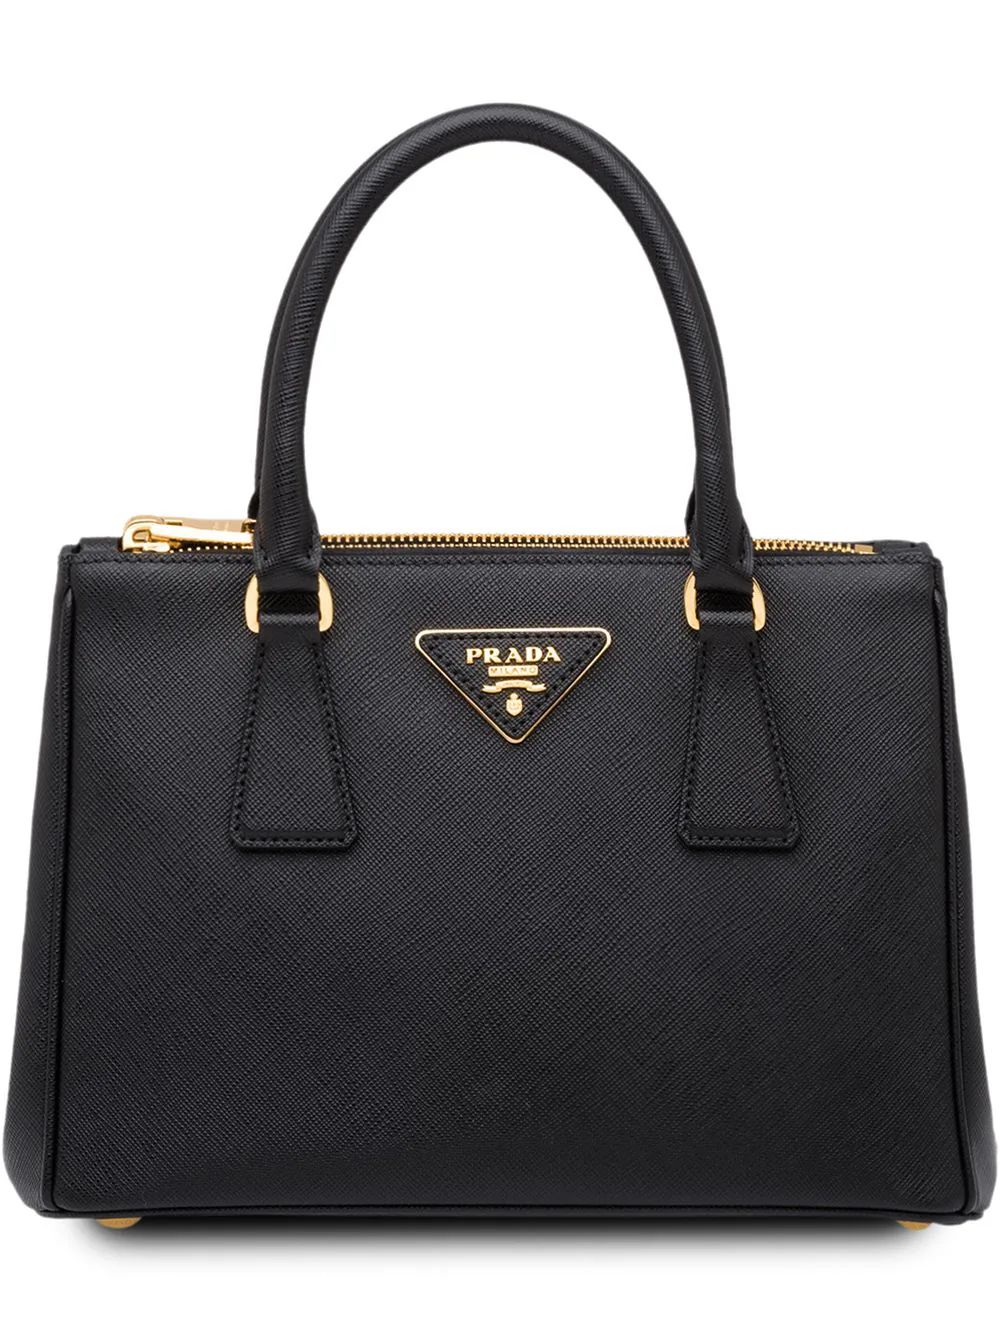 Prada Galleria tote bag - Black | FarFetch Global